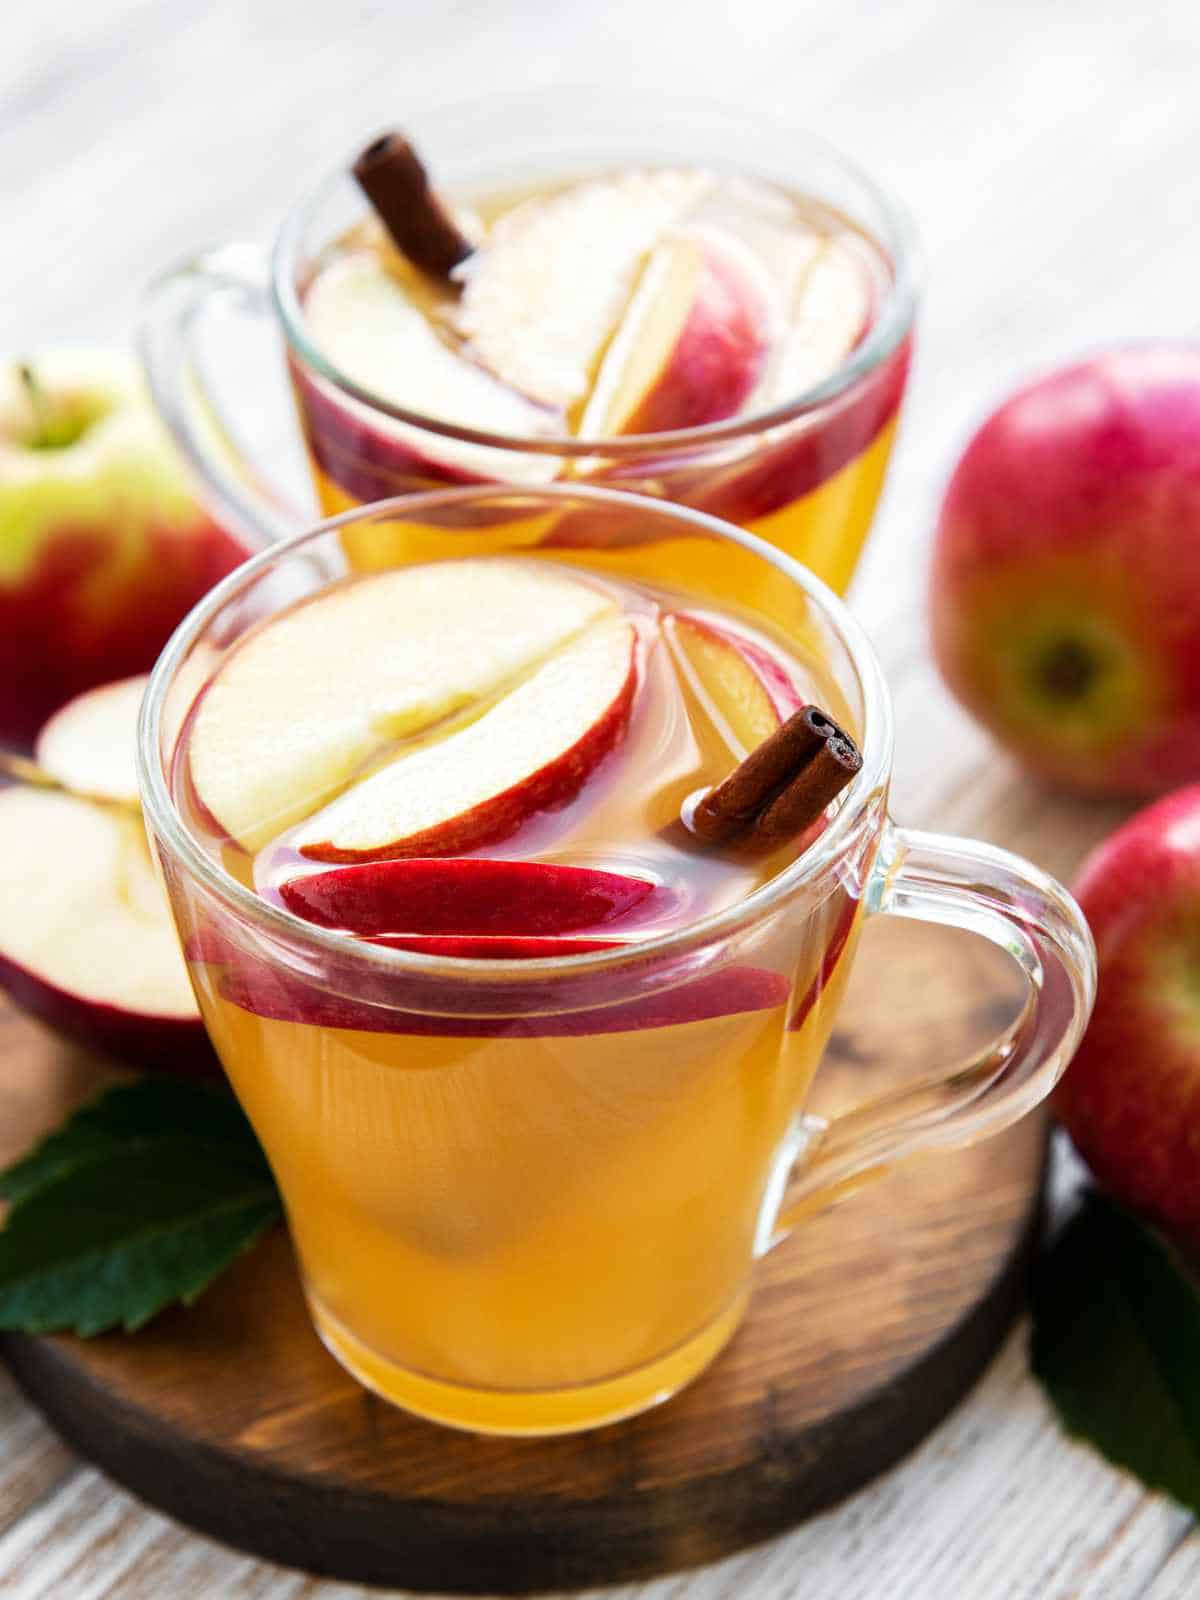 Apple cider beverage with apple slices and cinnamon sticks.